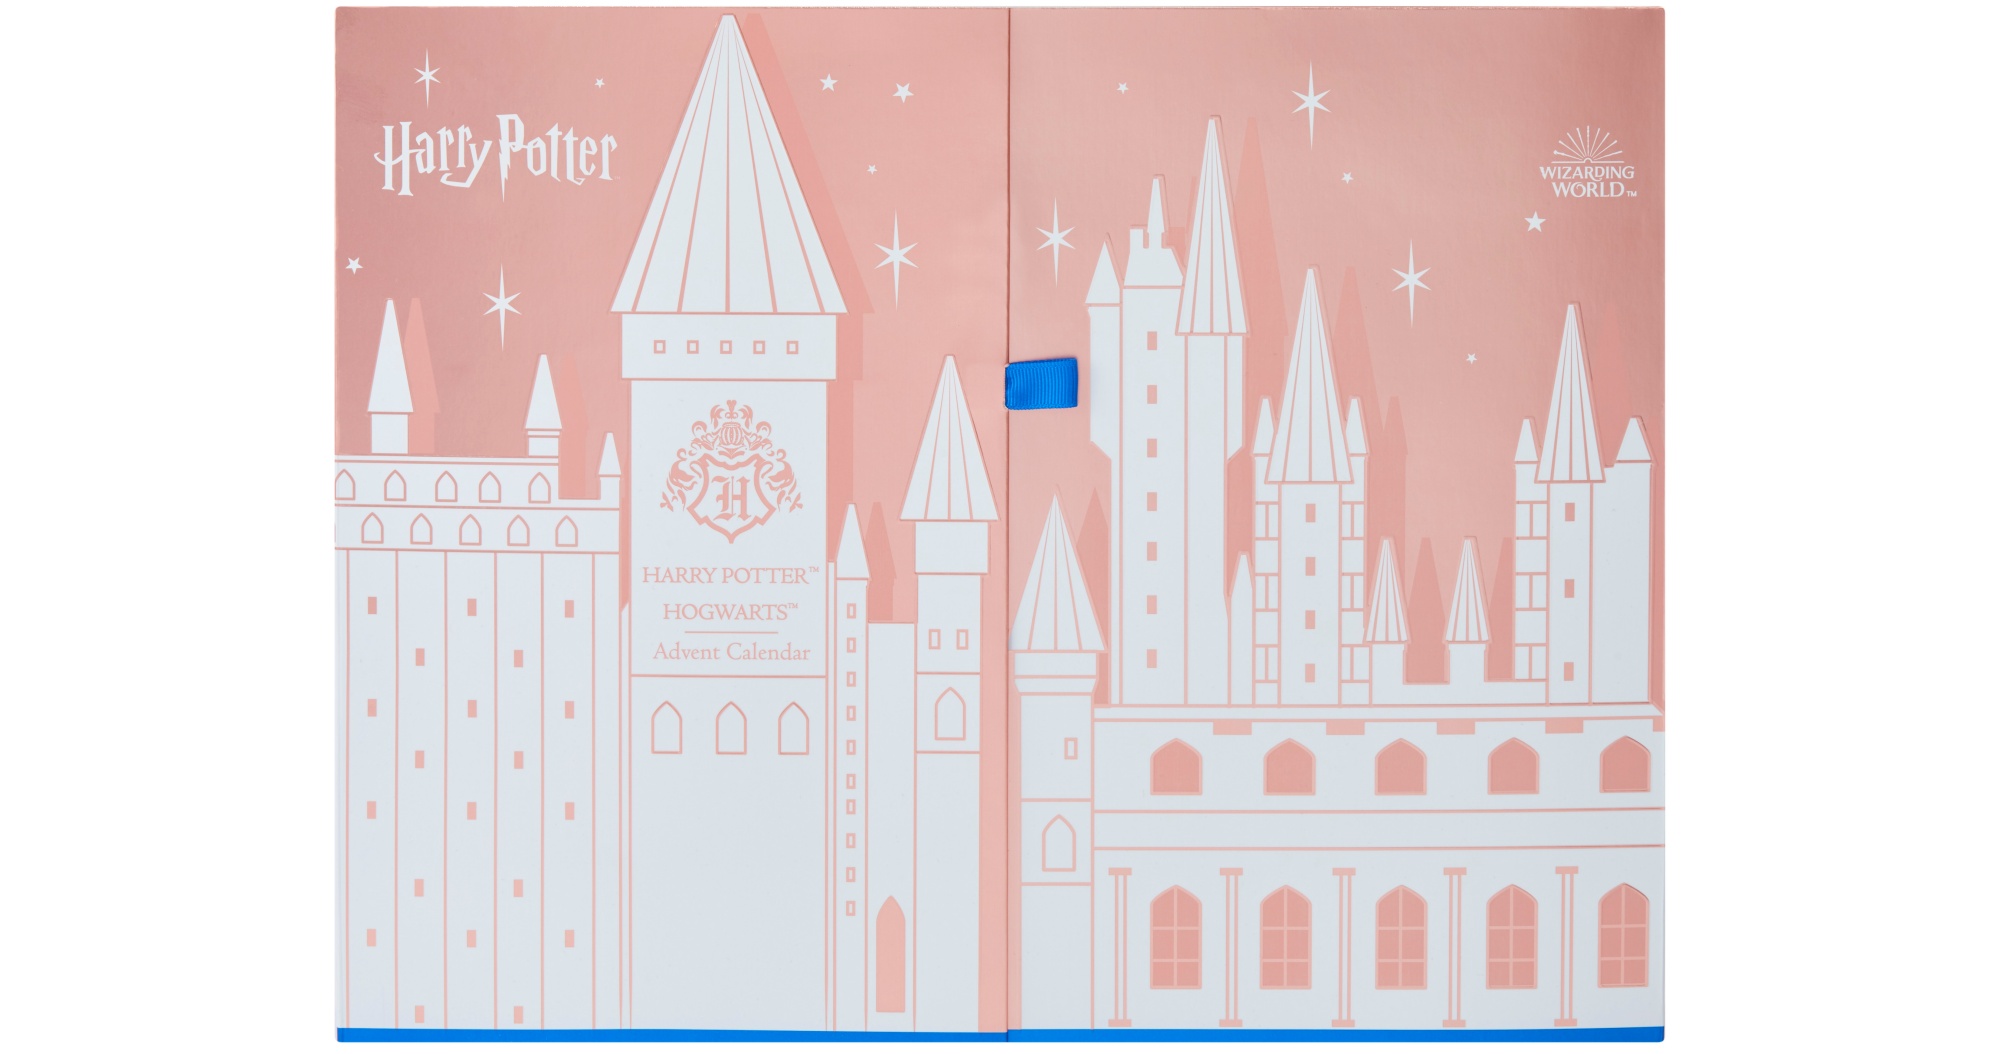 Harry Potter beauty advent calendar 2019